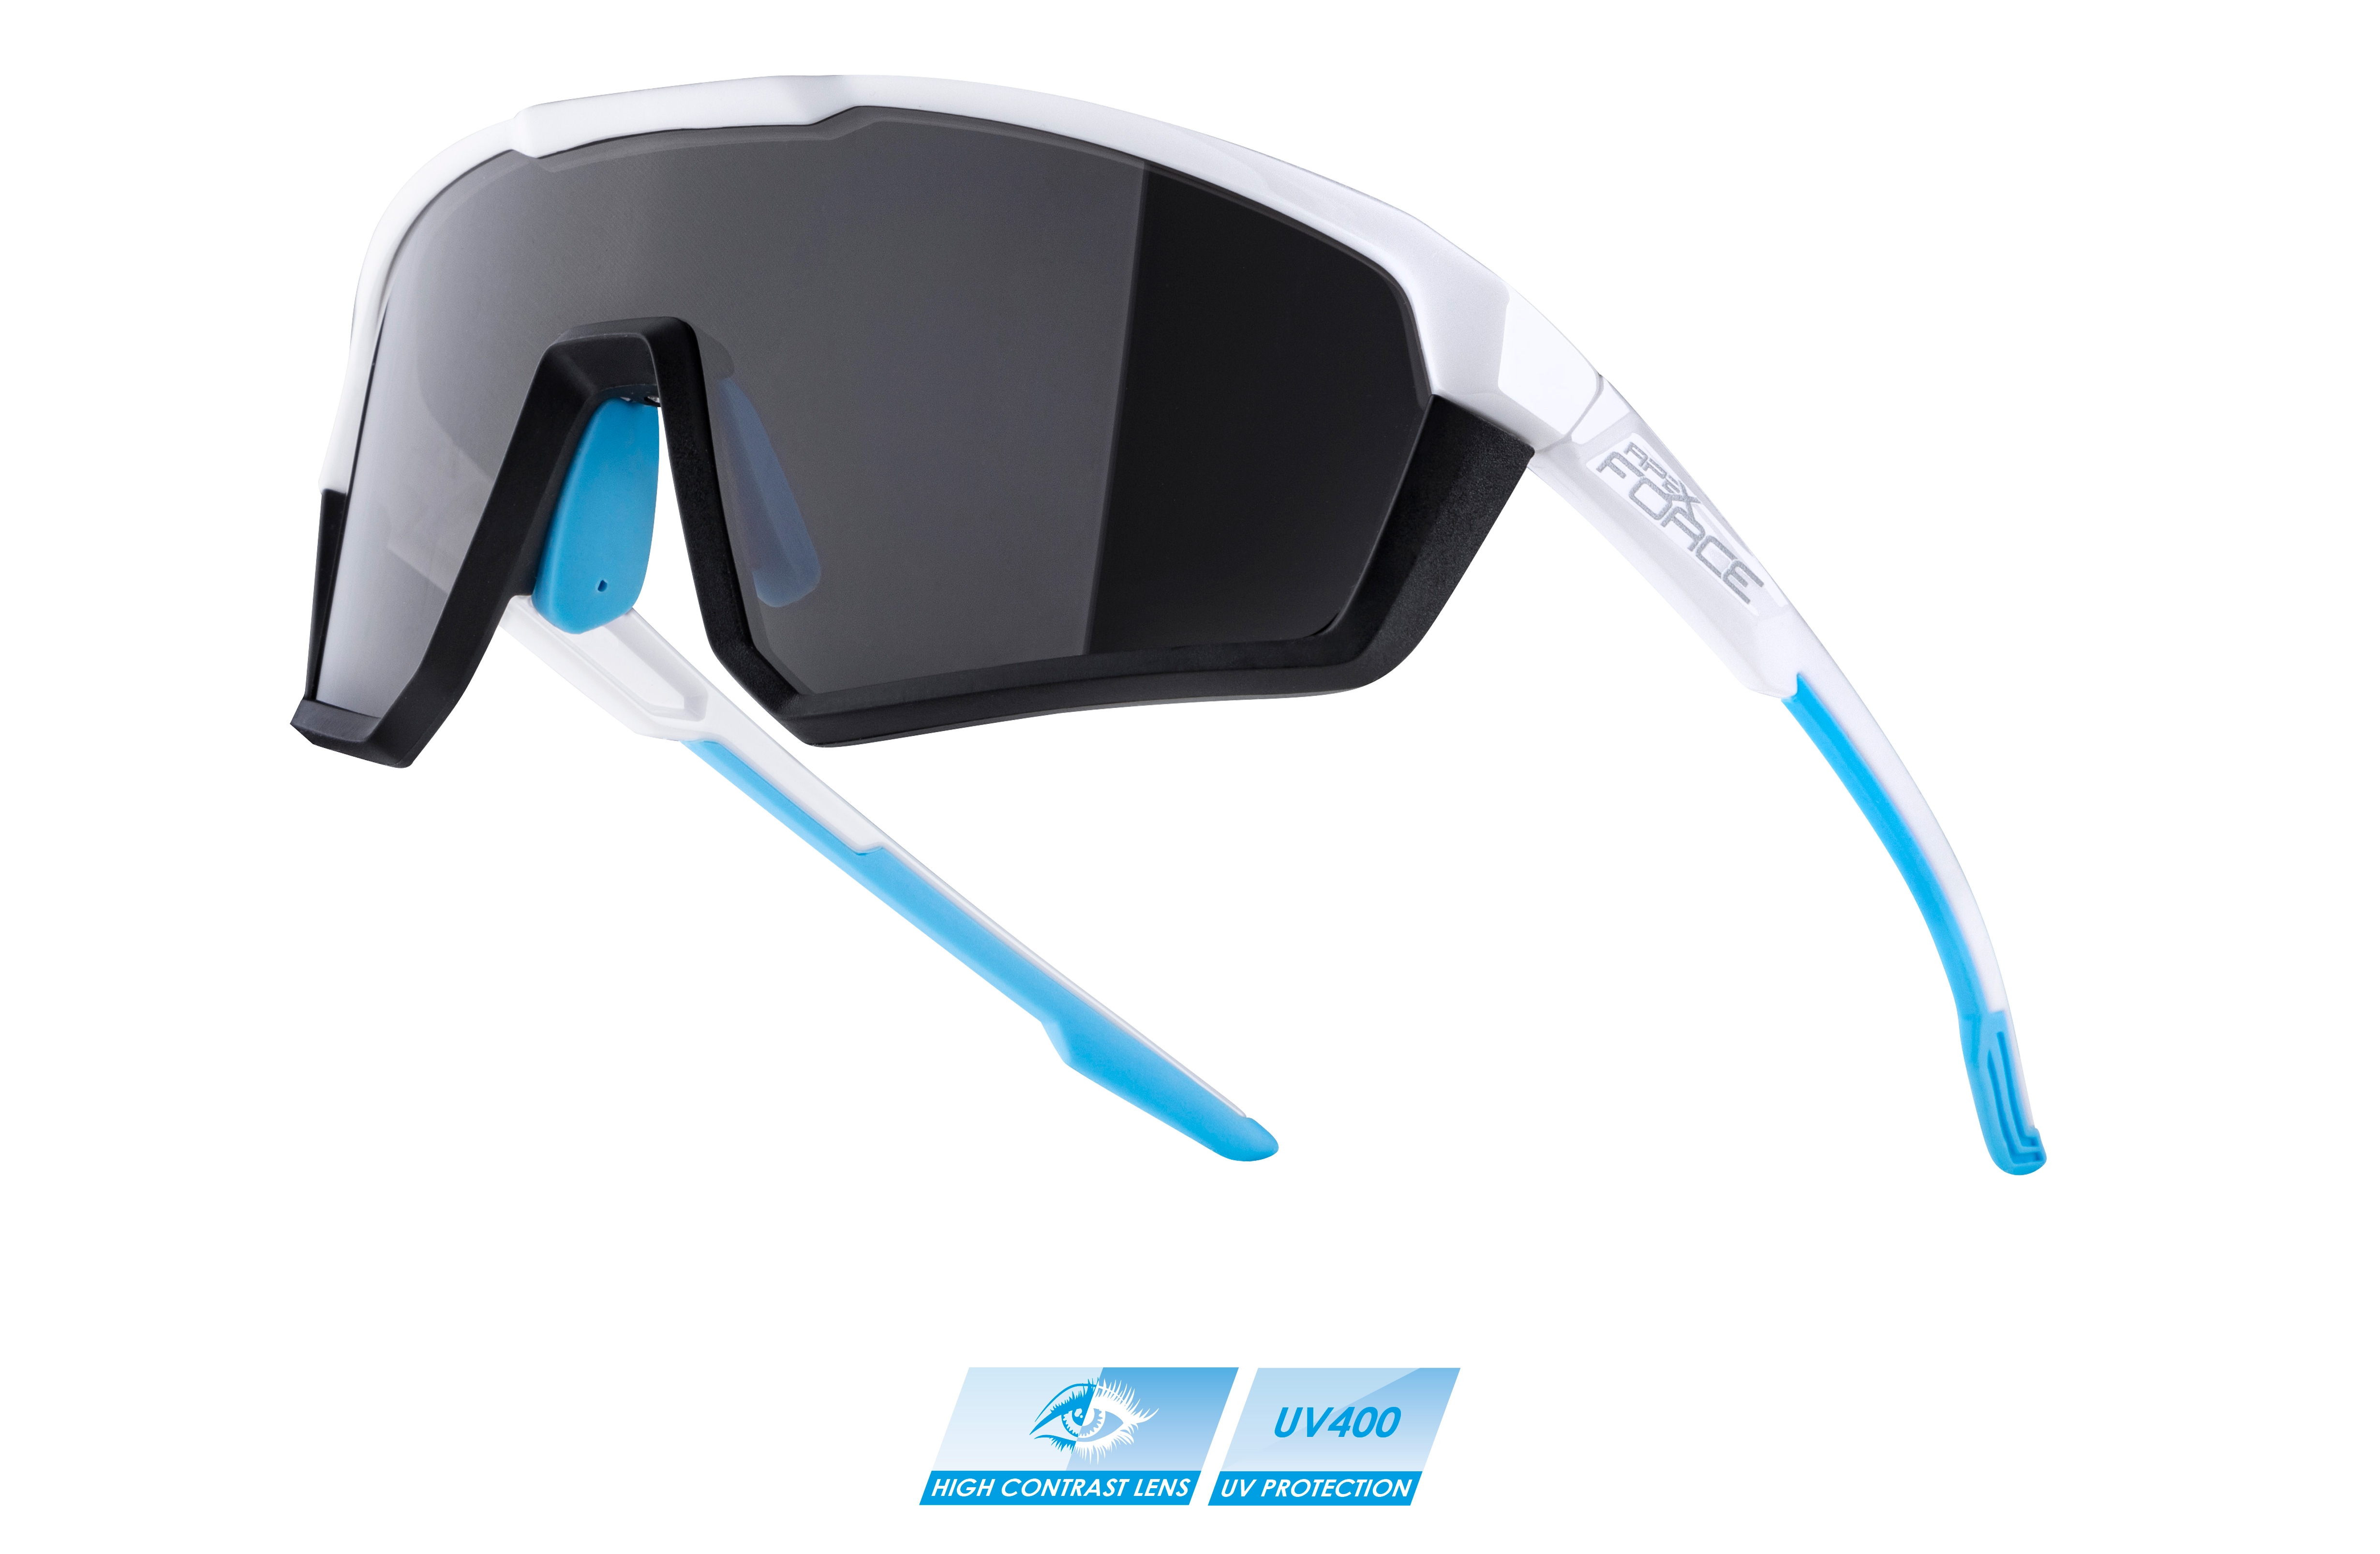 brýle FORCE APEX, bílo-šedé, černé kontrastní sklo varianta: barva: šedá, skla: kontrastní, určení: cyklistické, Řada: Black line